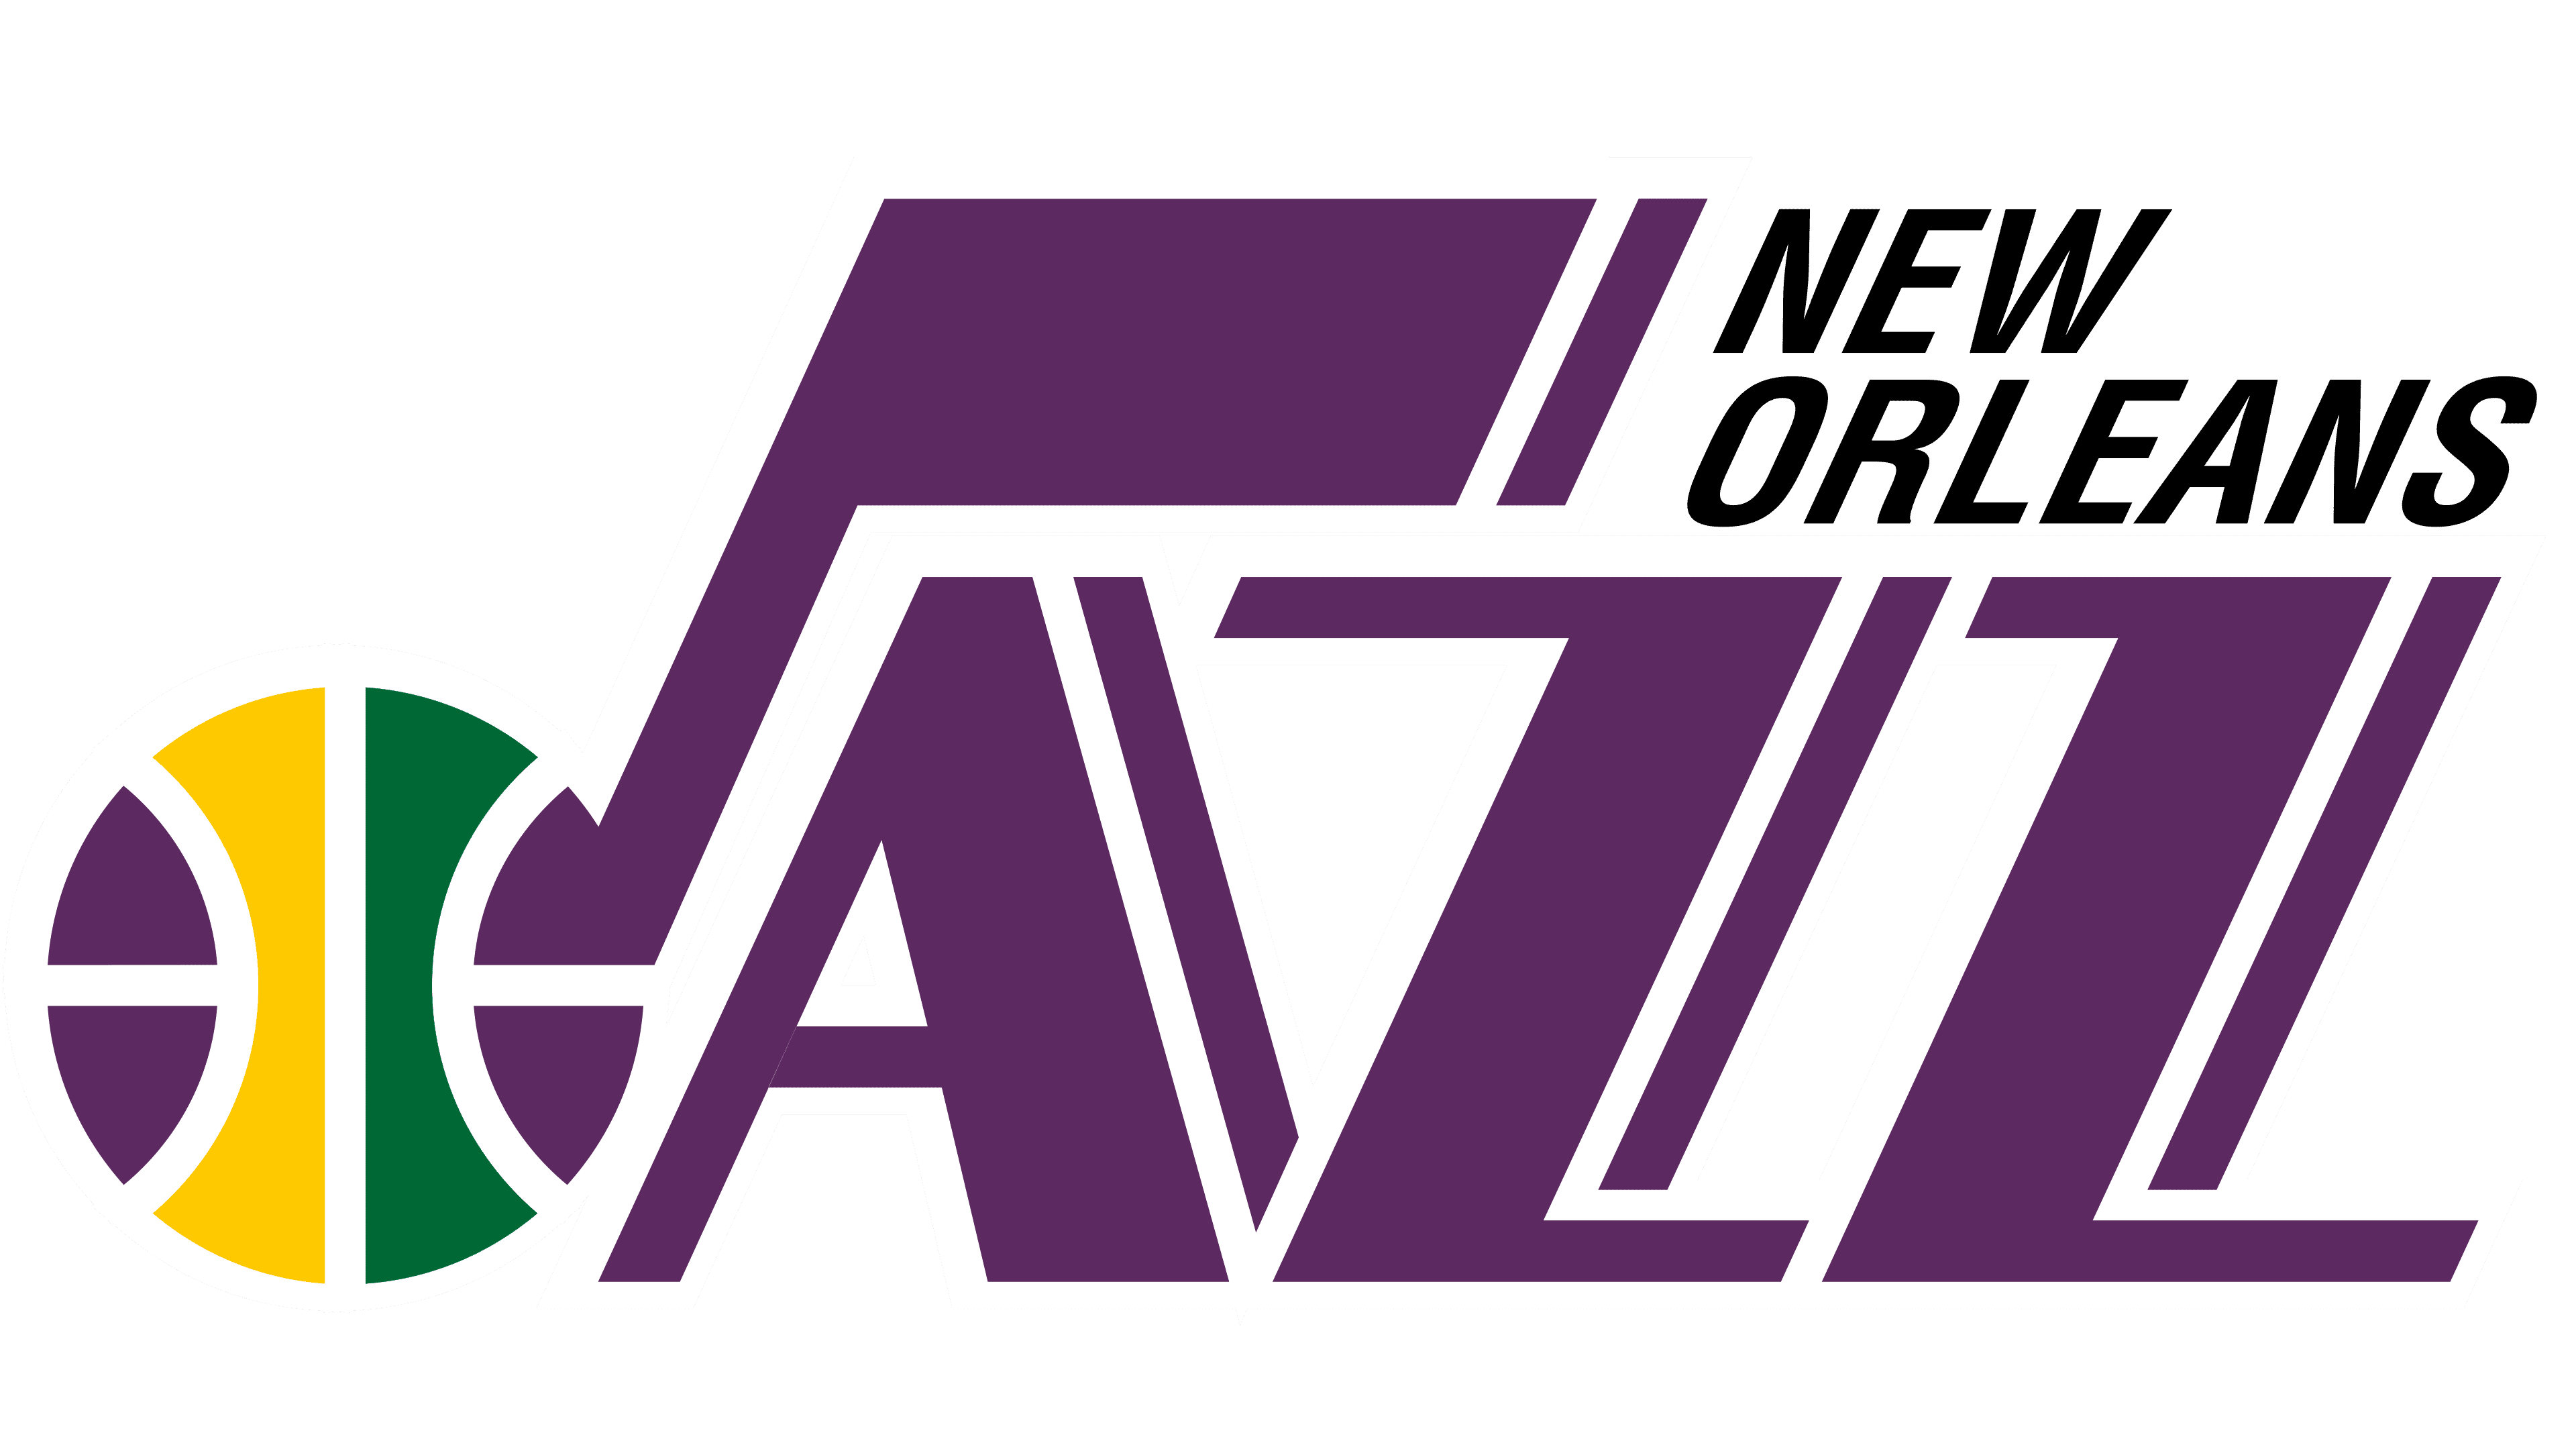 A Utah Jazz rebrand could mean big changes in 2023